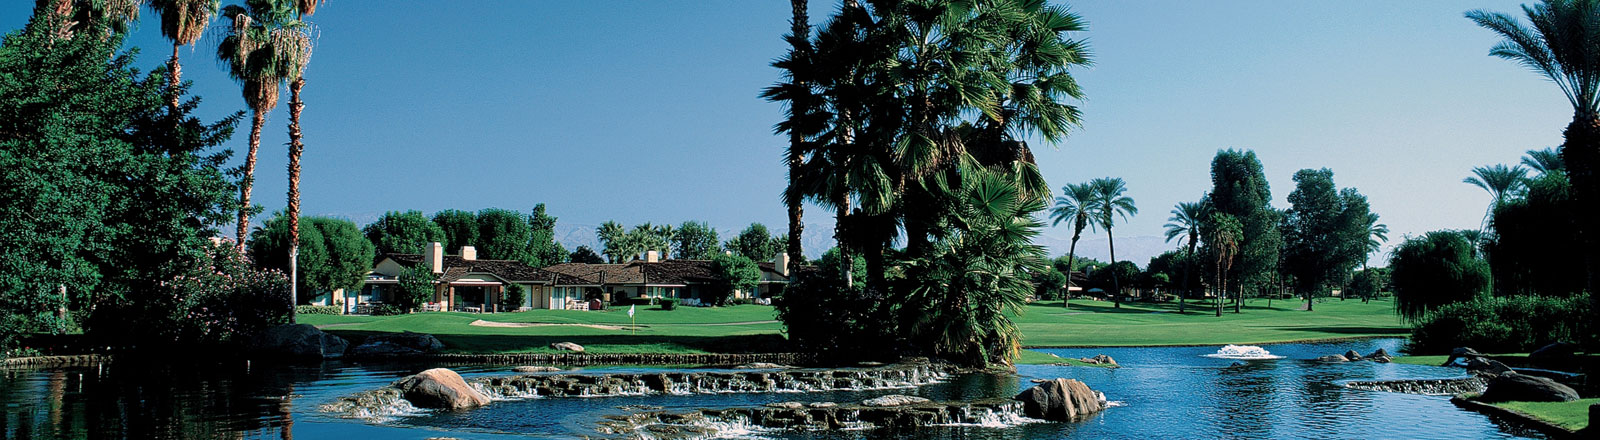 California - Palm Springs Header